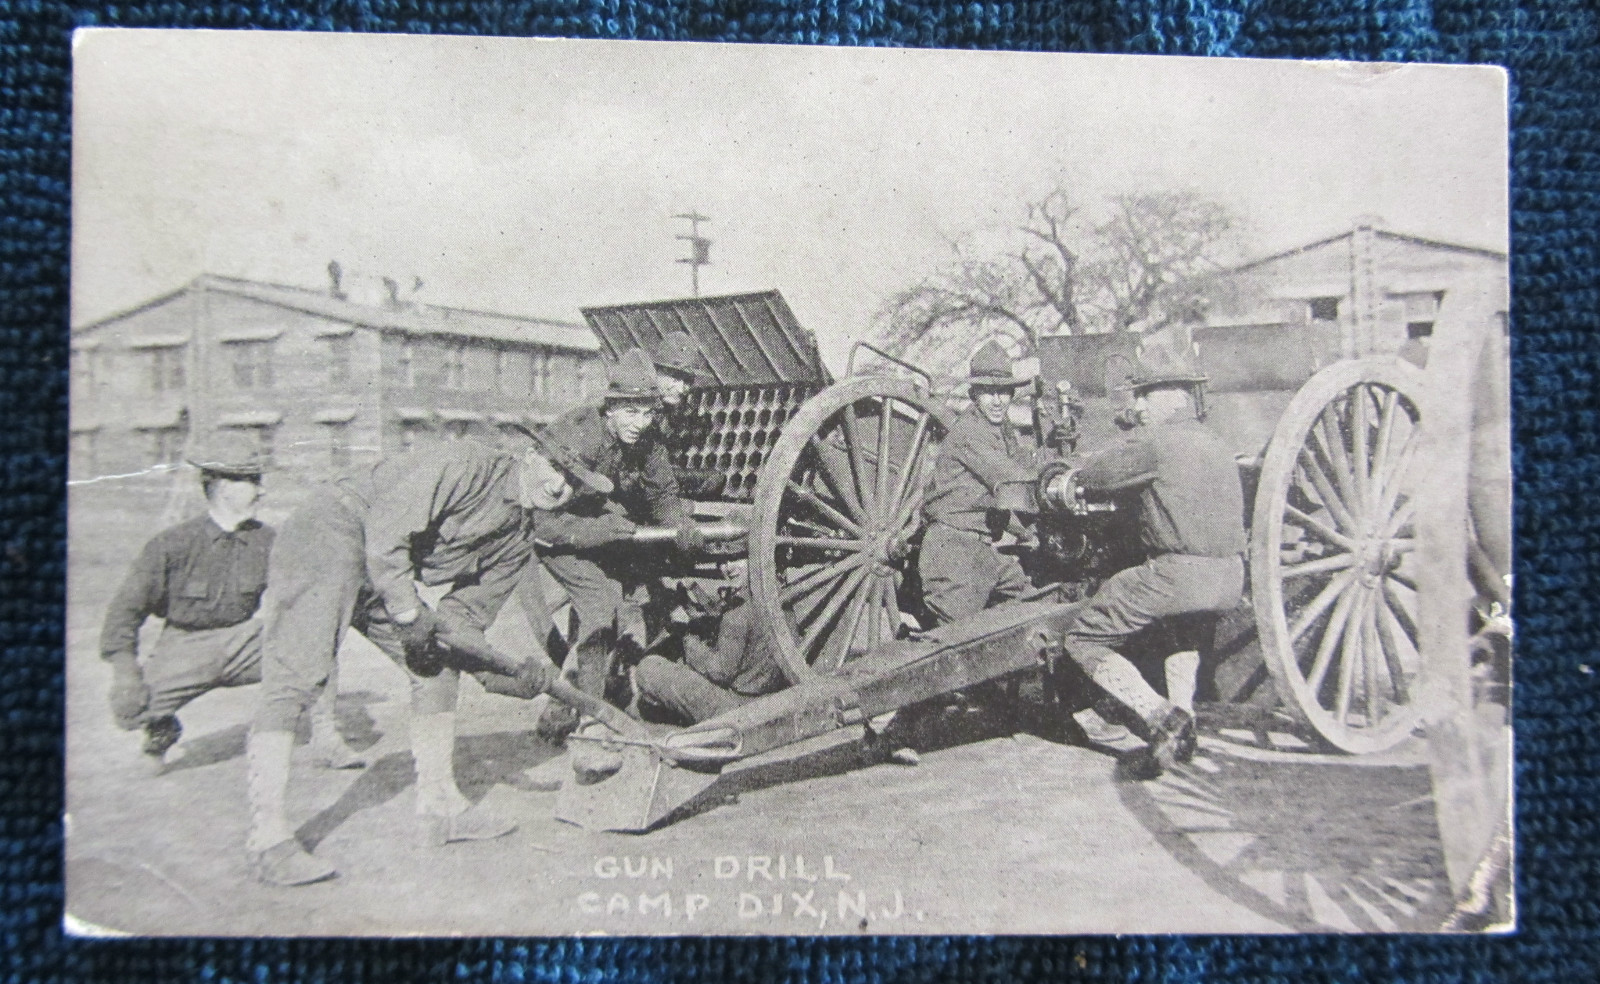 Camp Dix - Gun Drill - c 1918